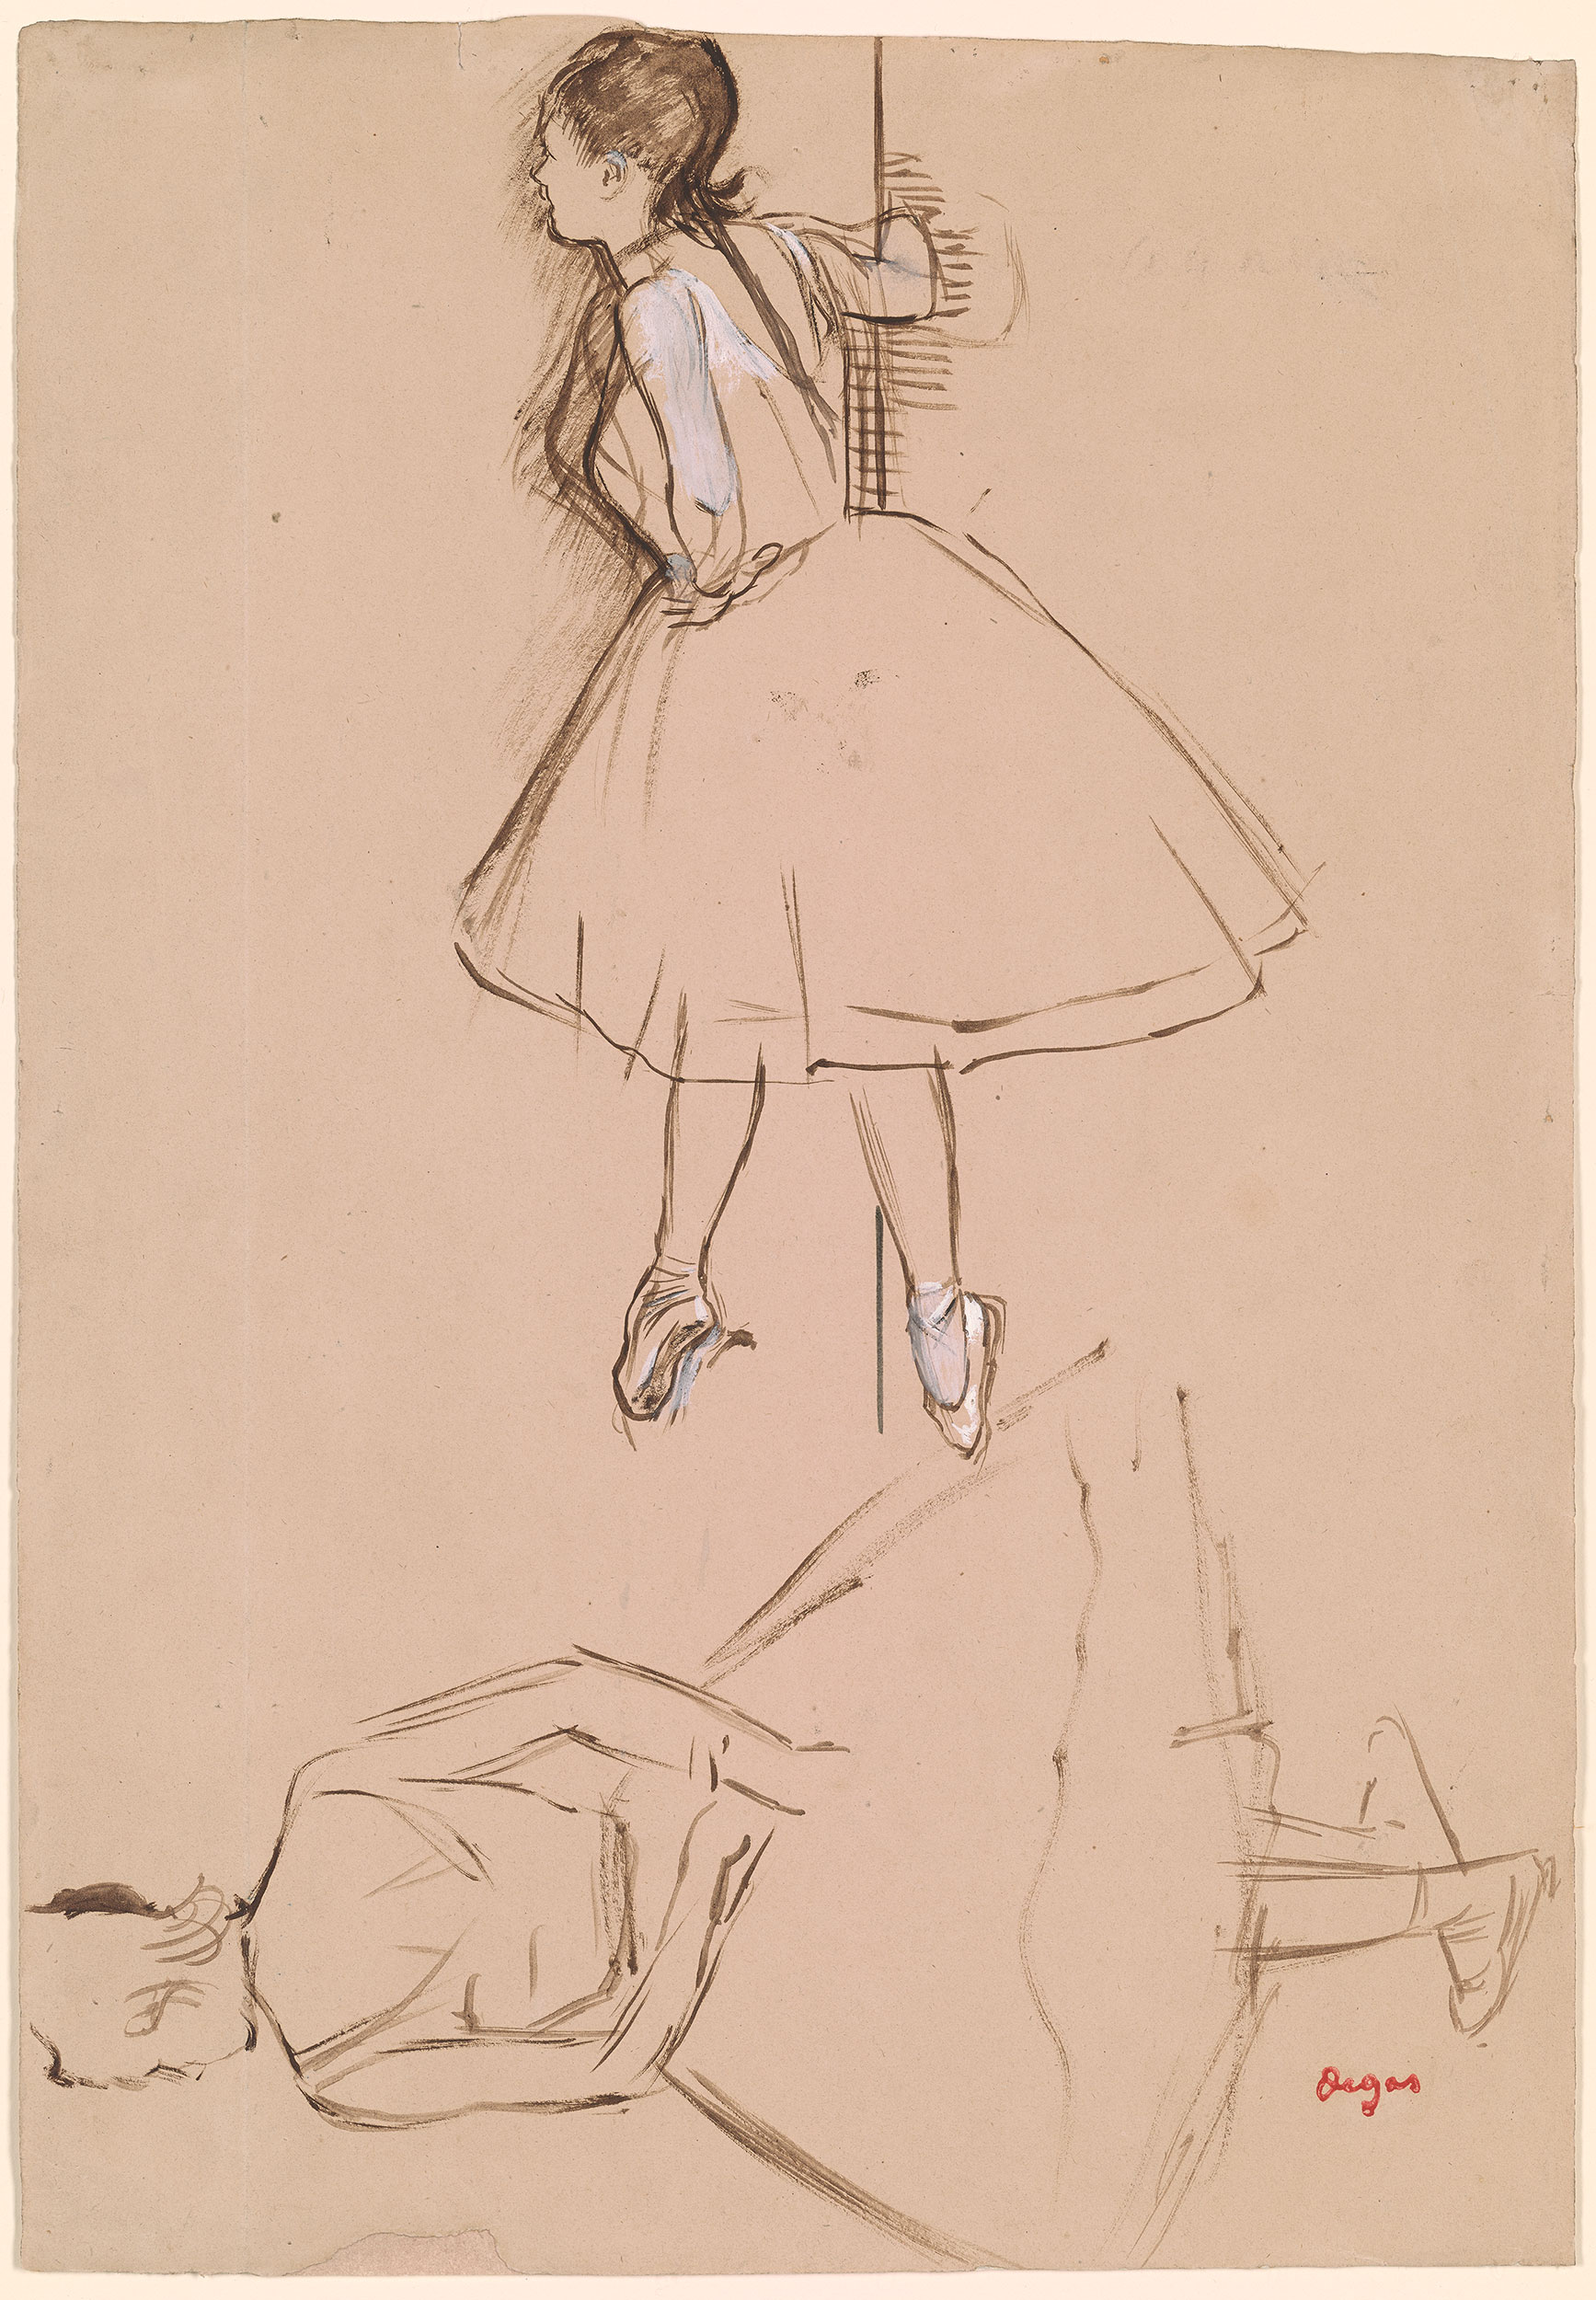 Degas Sketchbook | The Morgan Library & Museum